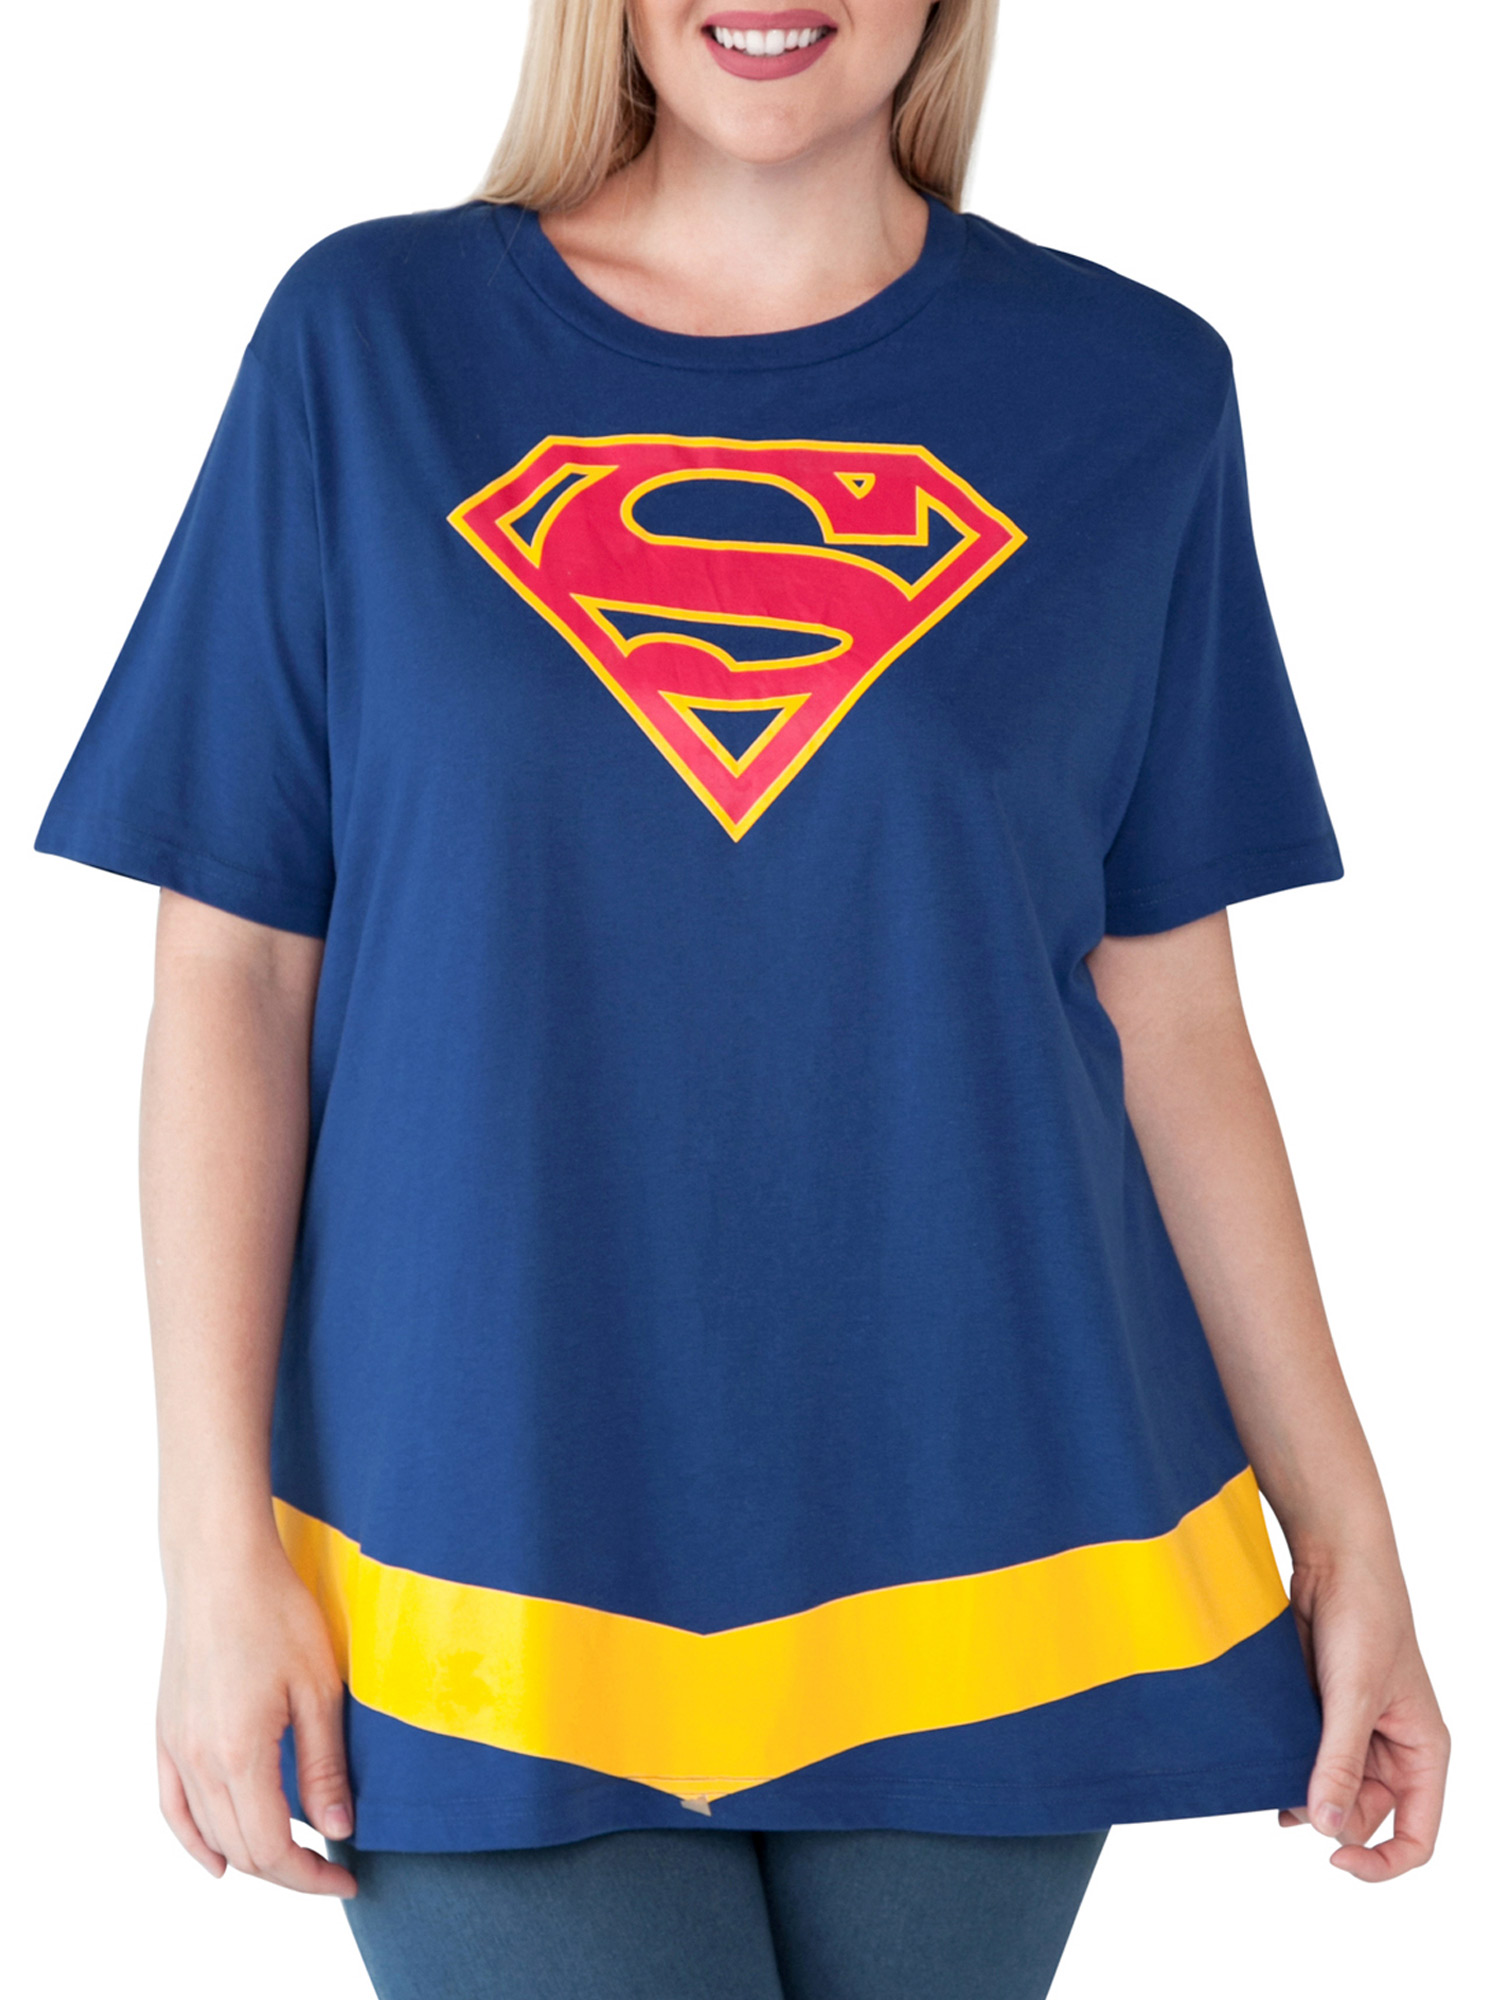 DC Comics Supergirl T-Shirt Costume Tee Women's Plus Superhero DC Comics Blue